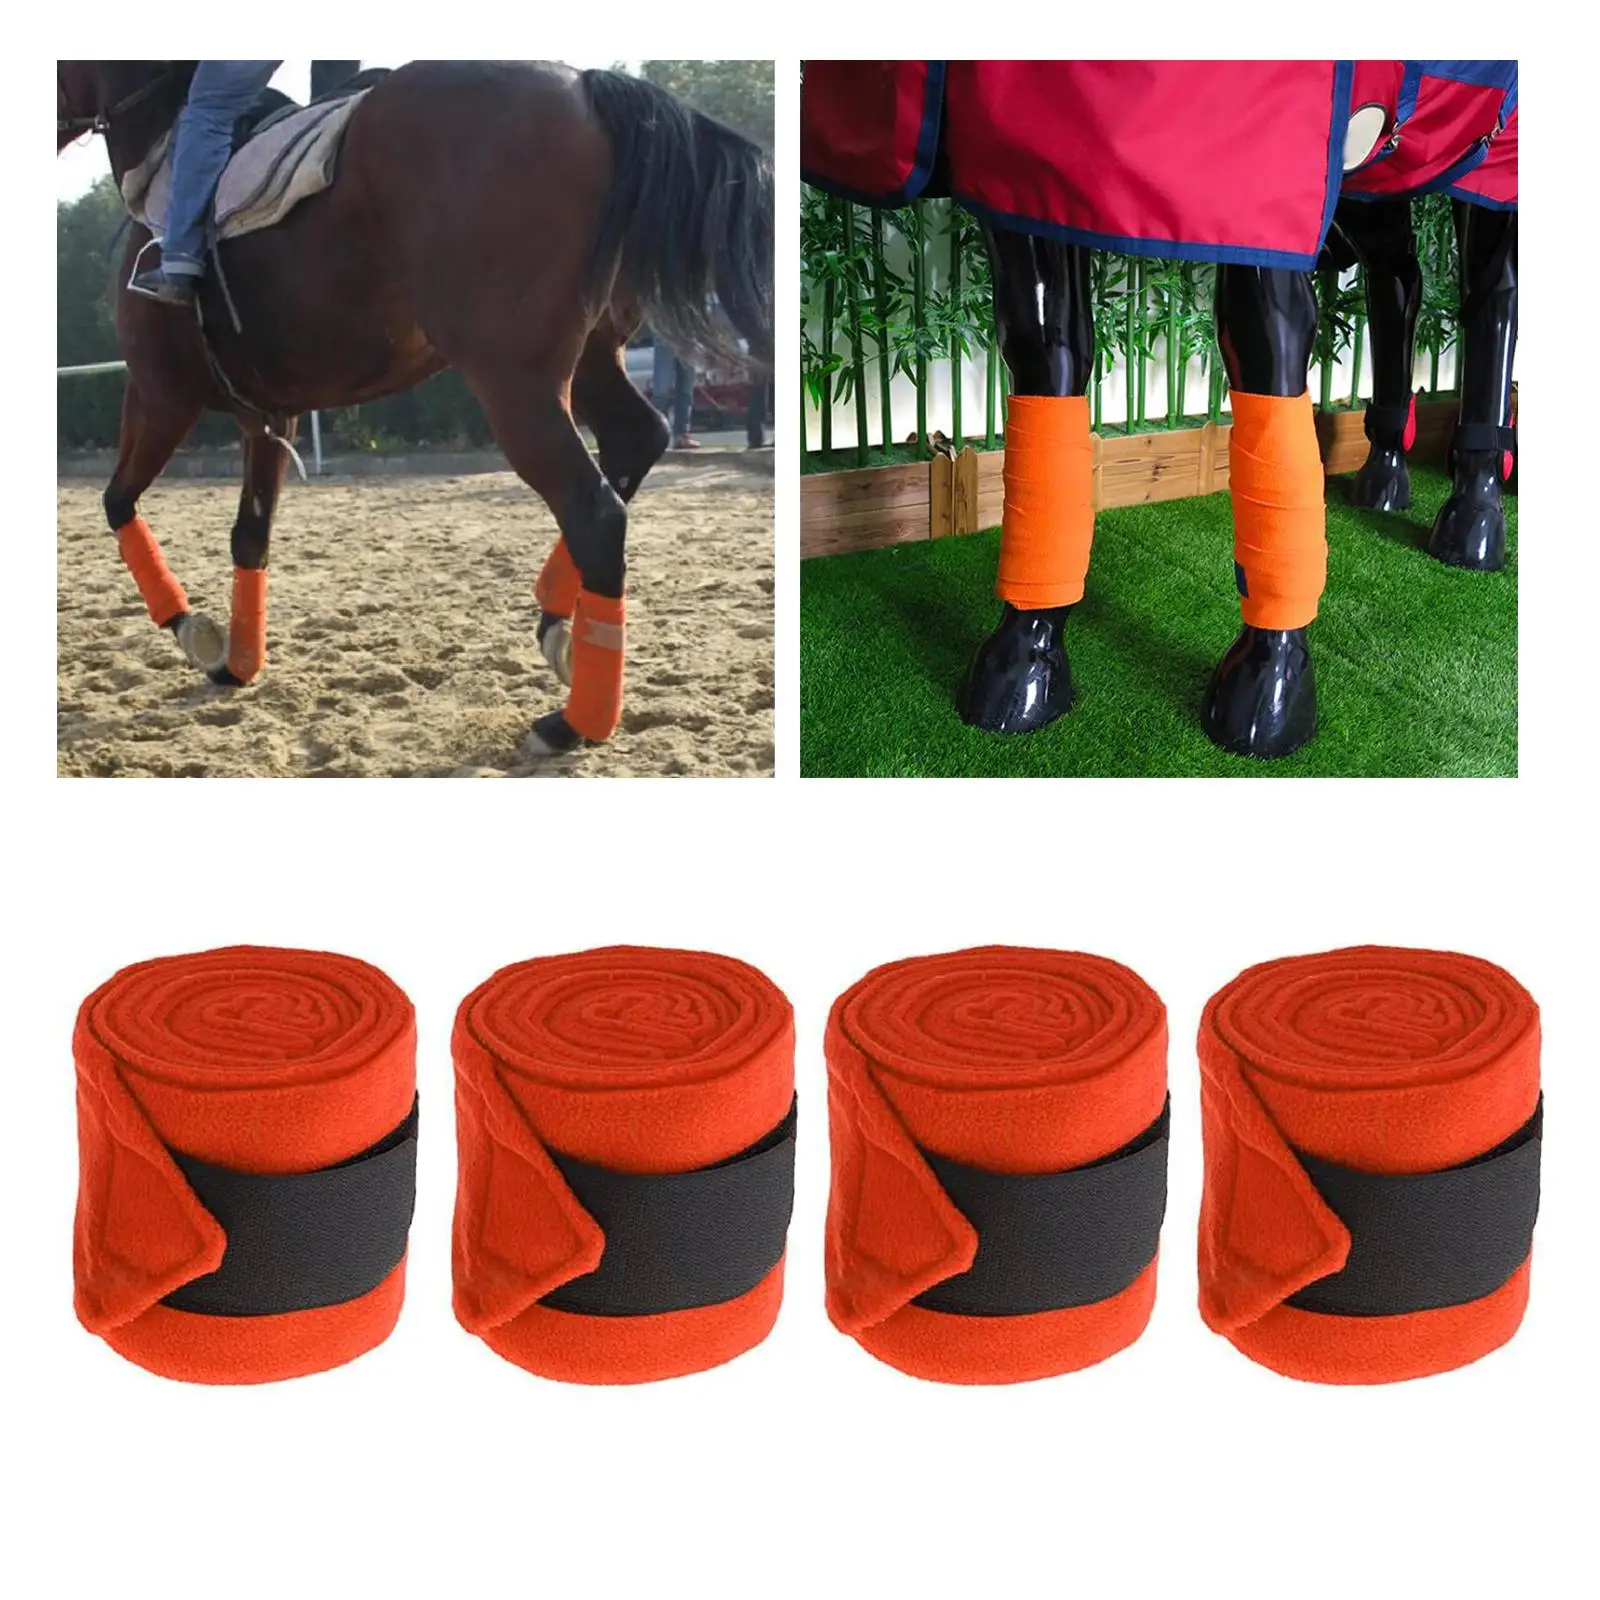 4pcs Soft Fleece Horse Leg Wraps Protect Strap For Equestrian Riding Racing